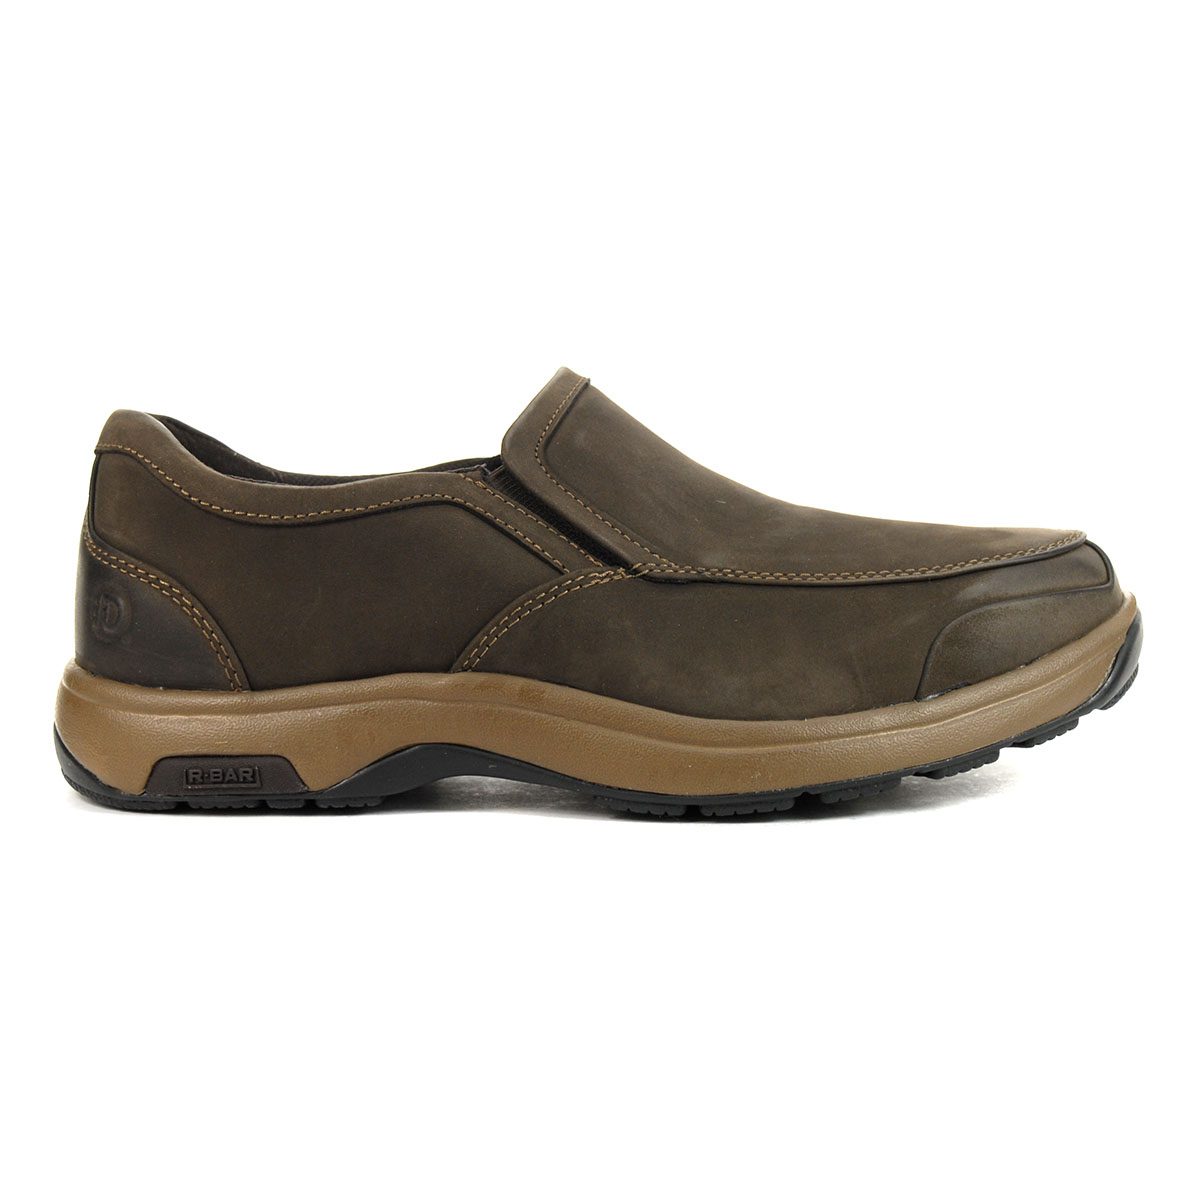 Dunham Men's 8000 Battery Park Brown/Nubuck Slip-On Shoes CH3007 ...